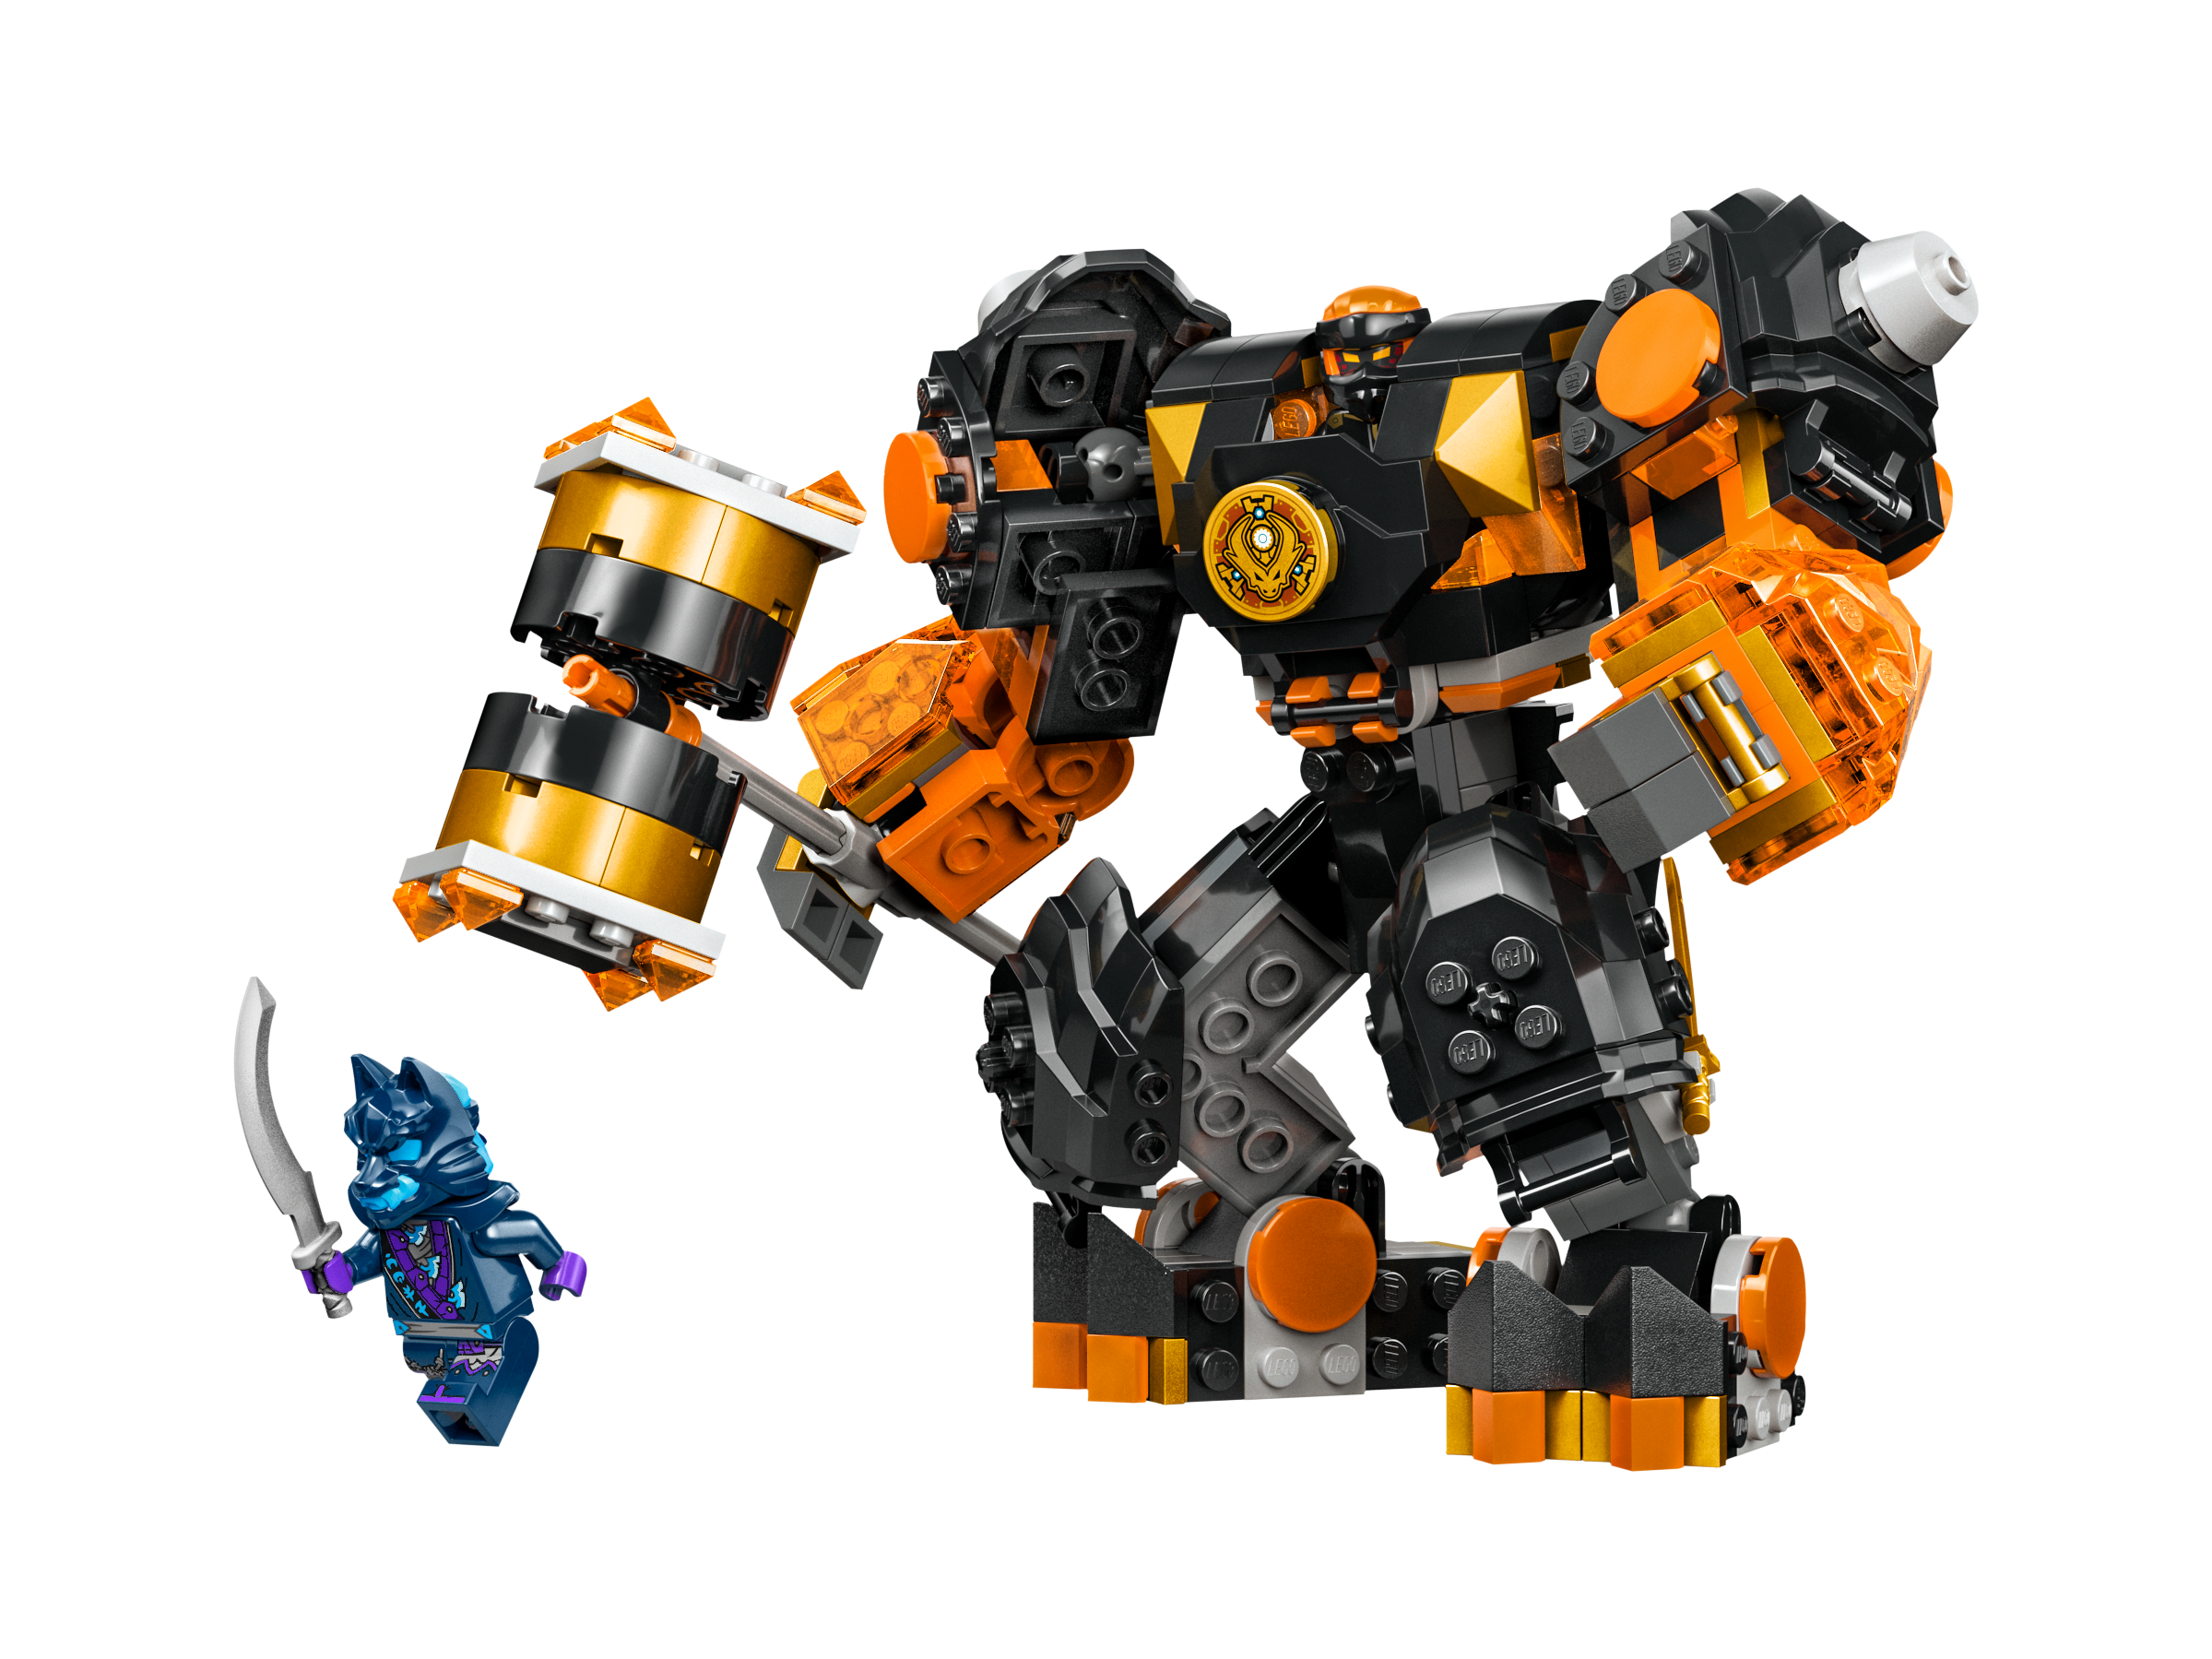 Đồ Chơi Lắp Ráp Chiến Giáp Của Cole - Cole's Elemental Earth Mech - Lego Ninjago 71806 (235 Mảnh Ghép)